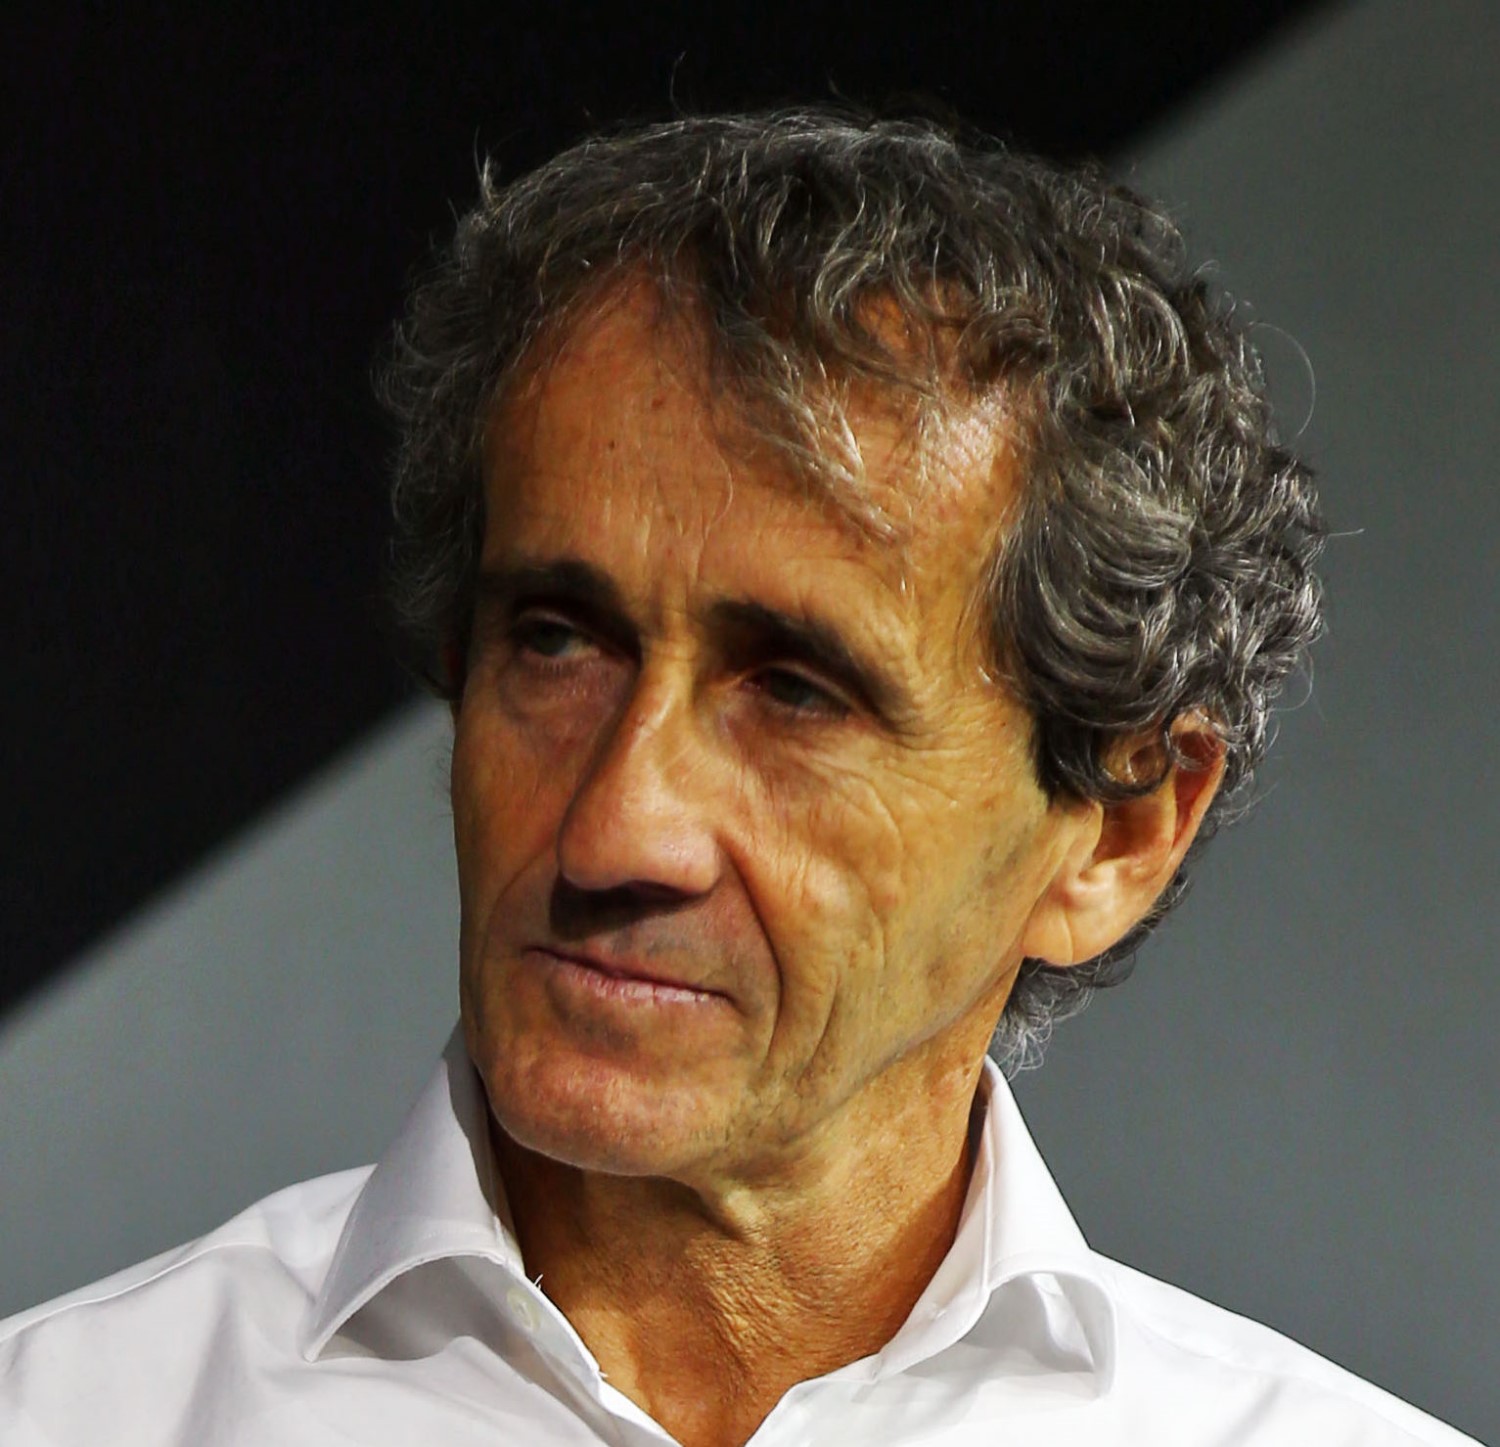 Alain Prost confirms McLaren stuck with Honda power